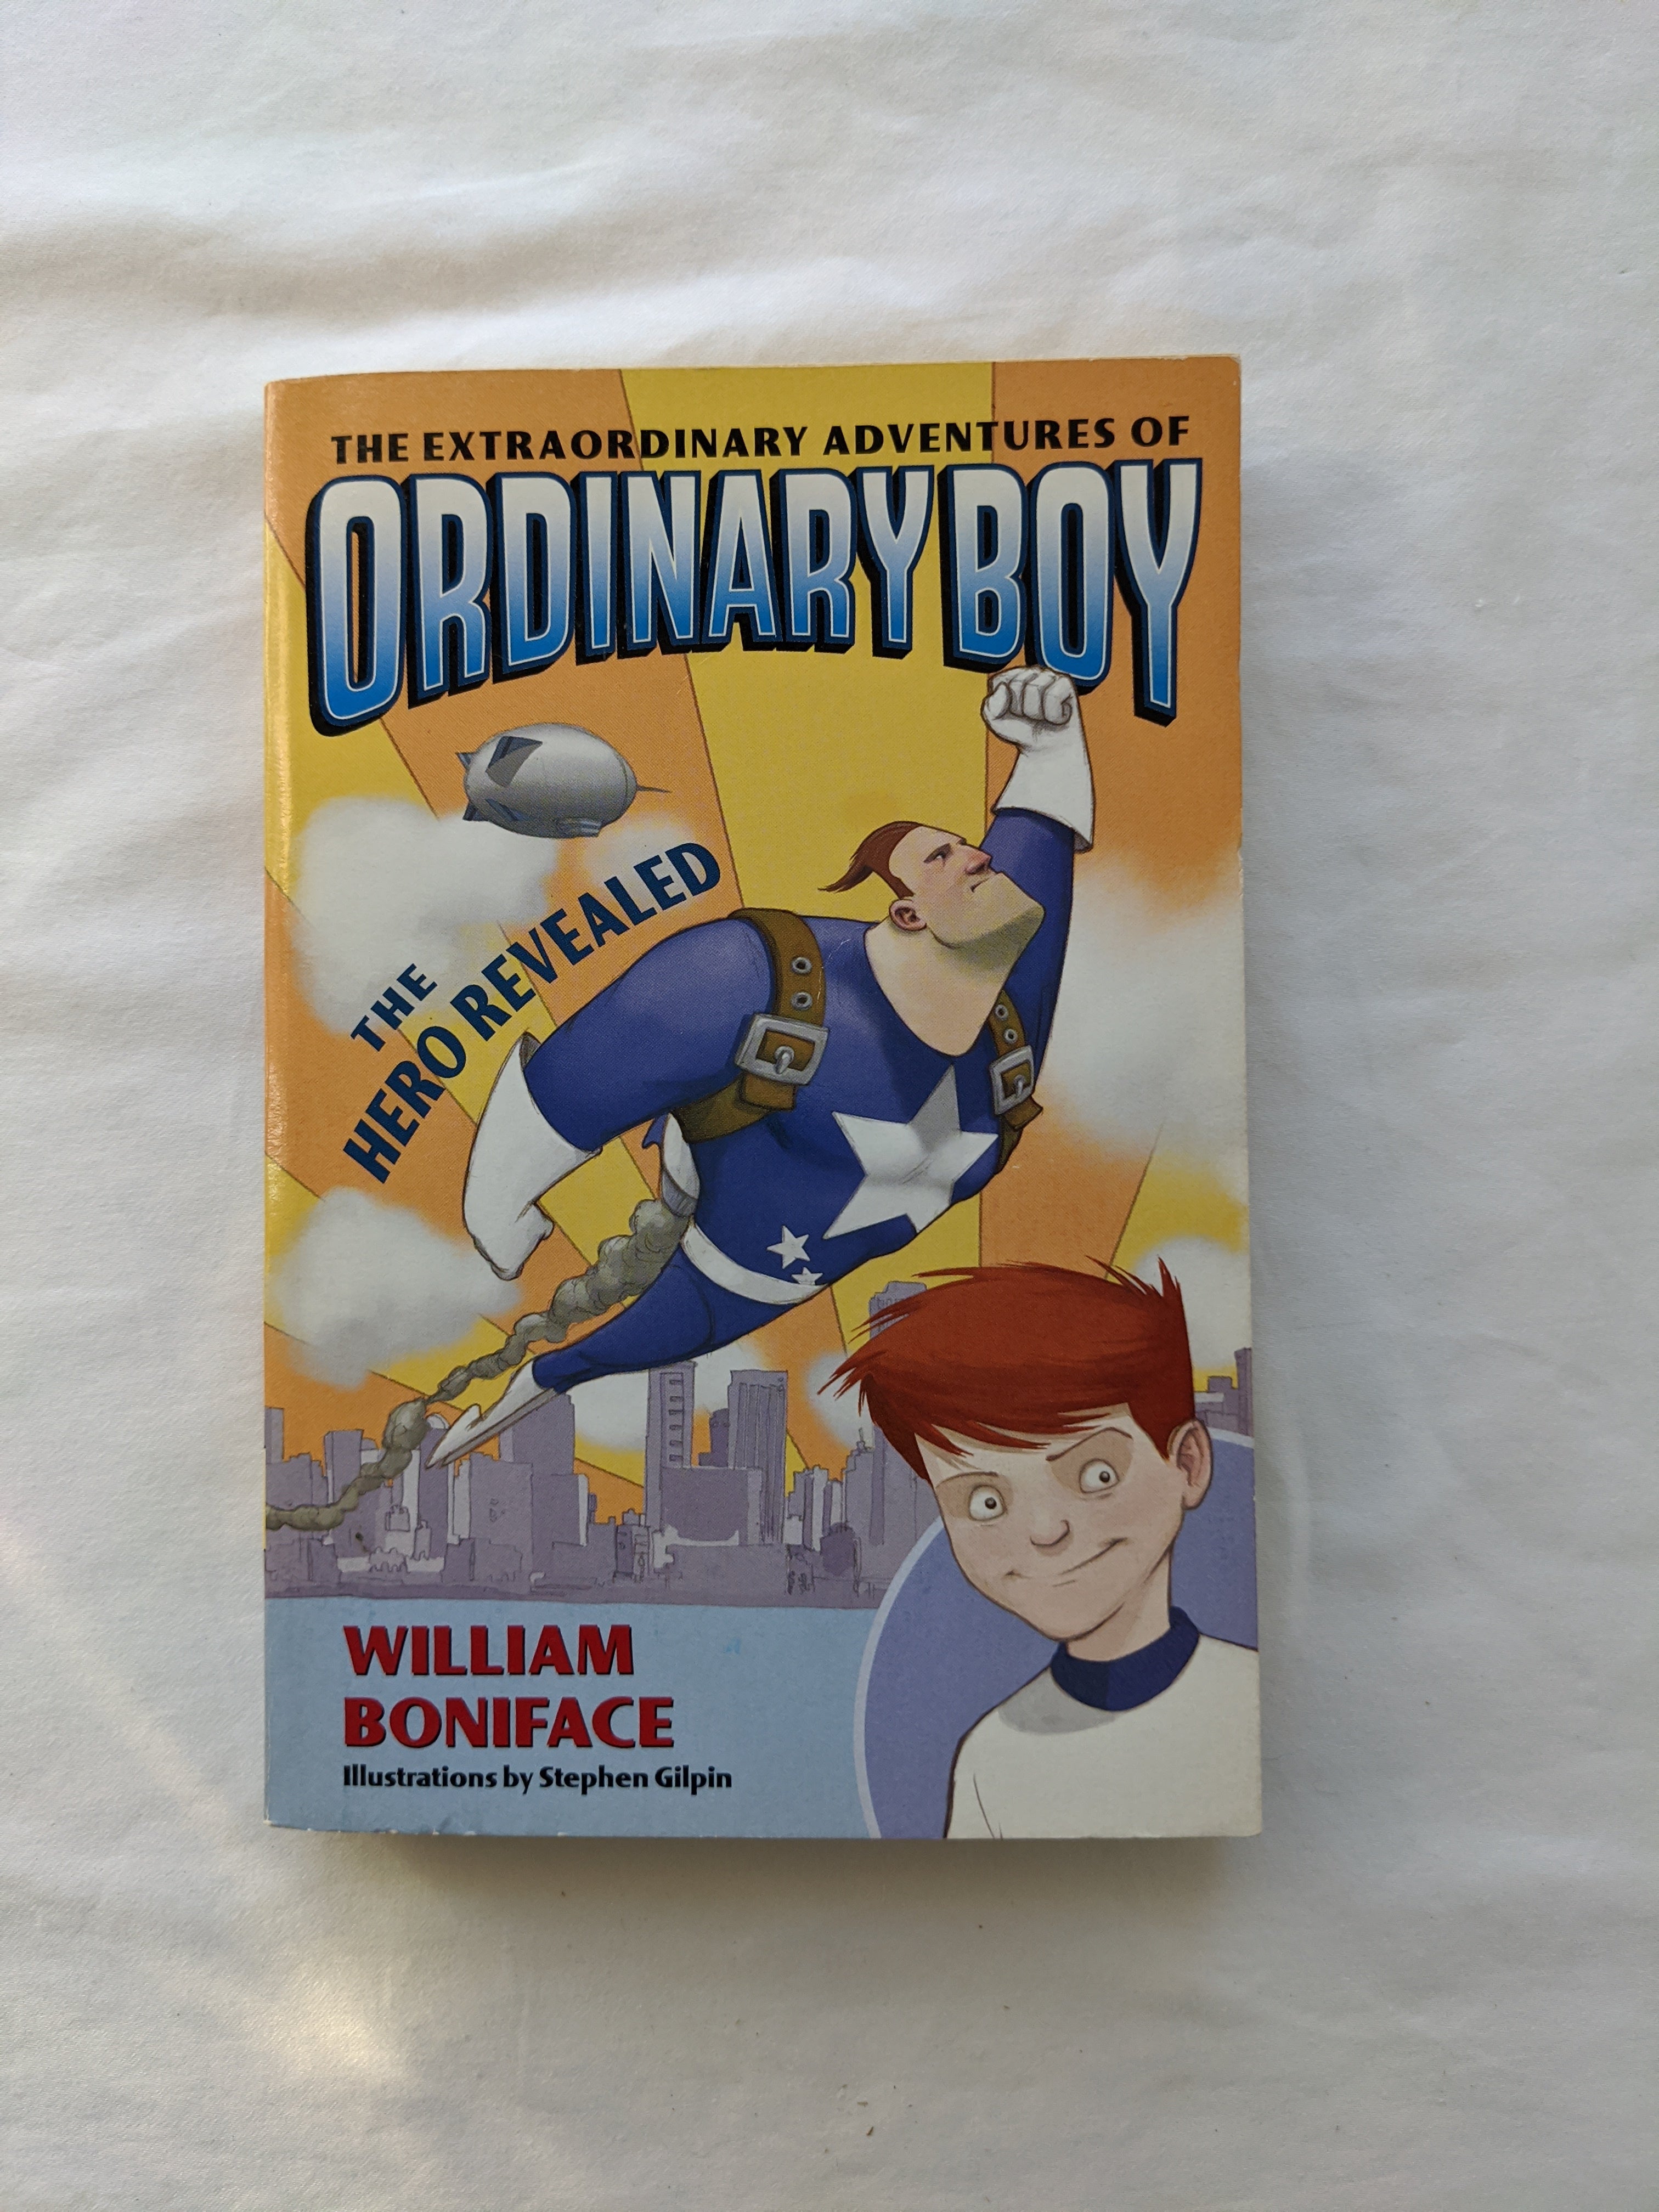 Adventures　1:　William　Pangobooks　the　Hero　Revealed　The　Ordinary　Book　Extraordinary　Boy,　Boniface,　of　by　Paperback